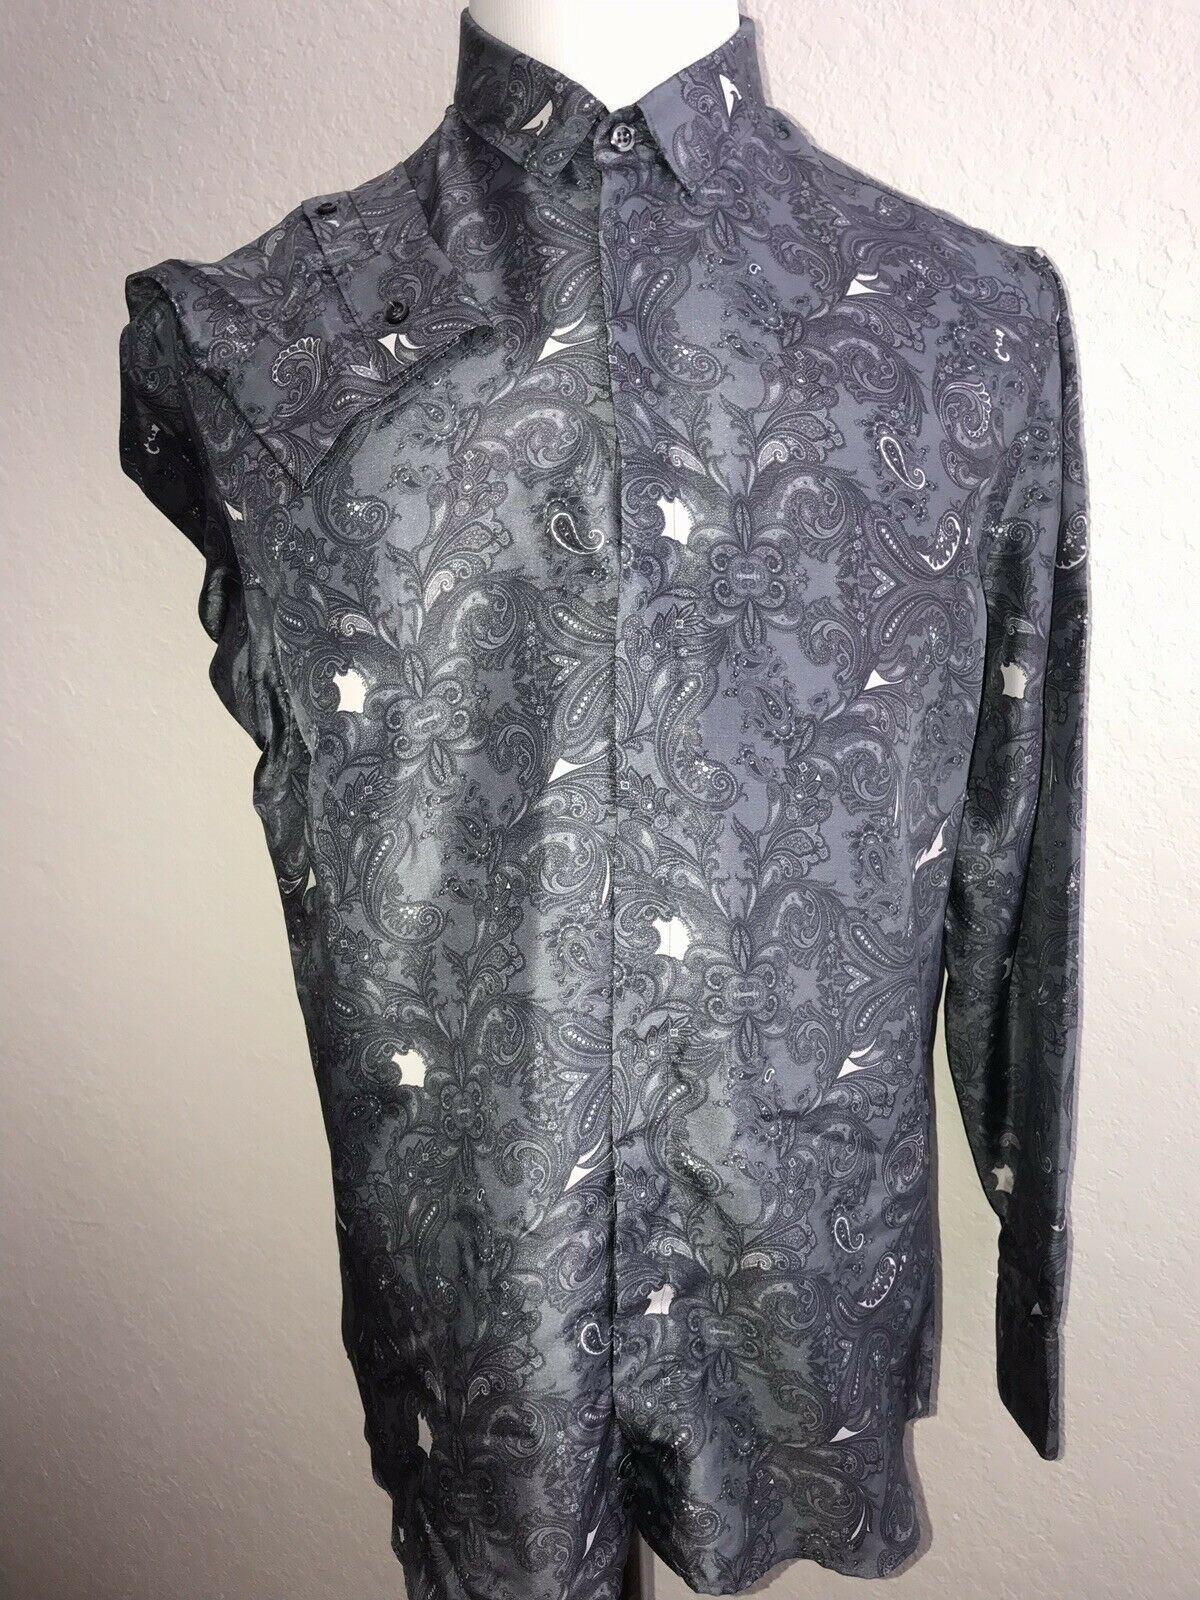 NWT $675 Emporio Armani Men's Gray Silk Dress Shirt Size 38/15 T1CC2T